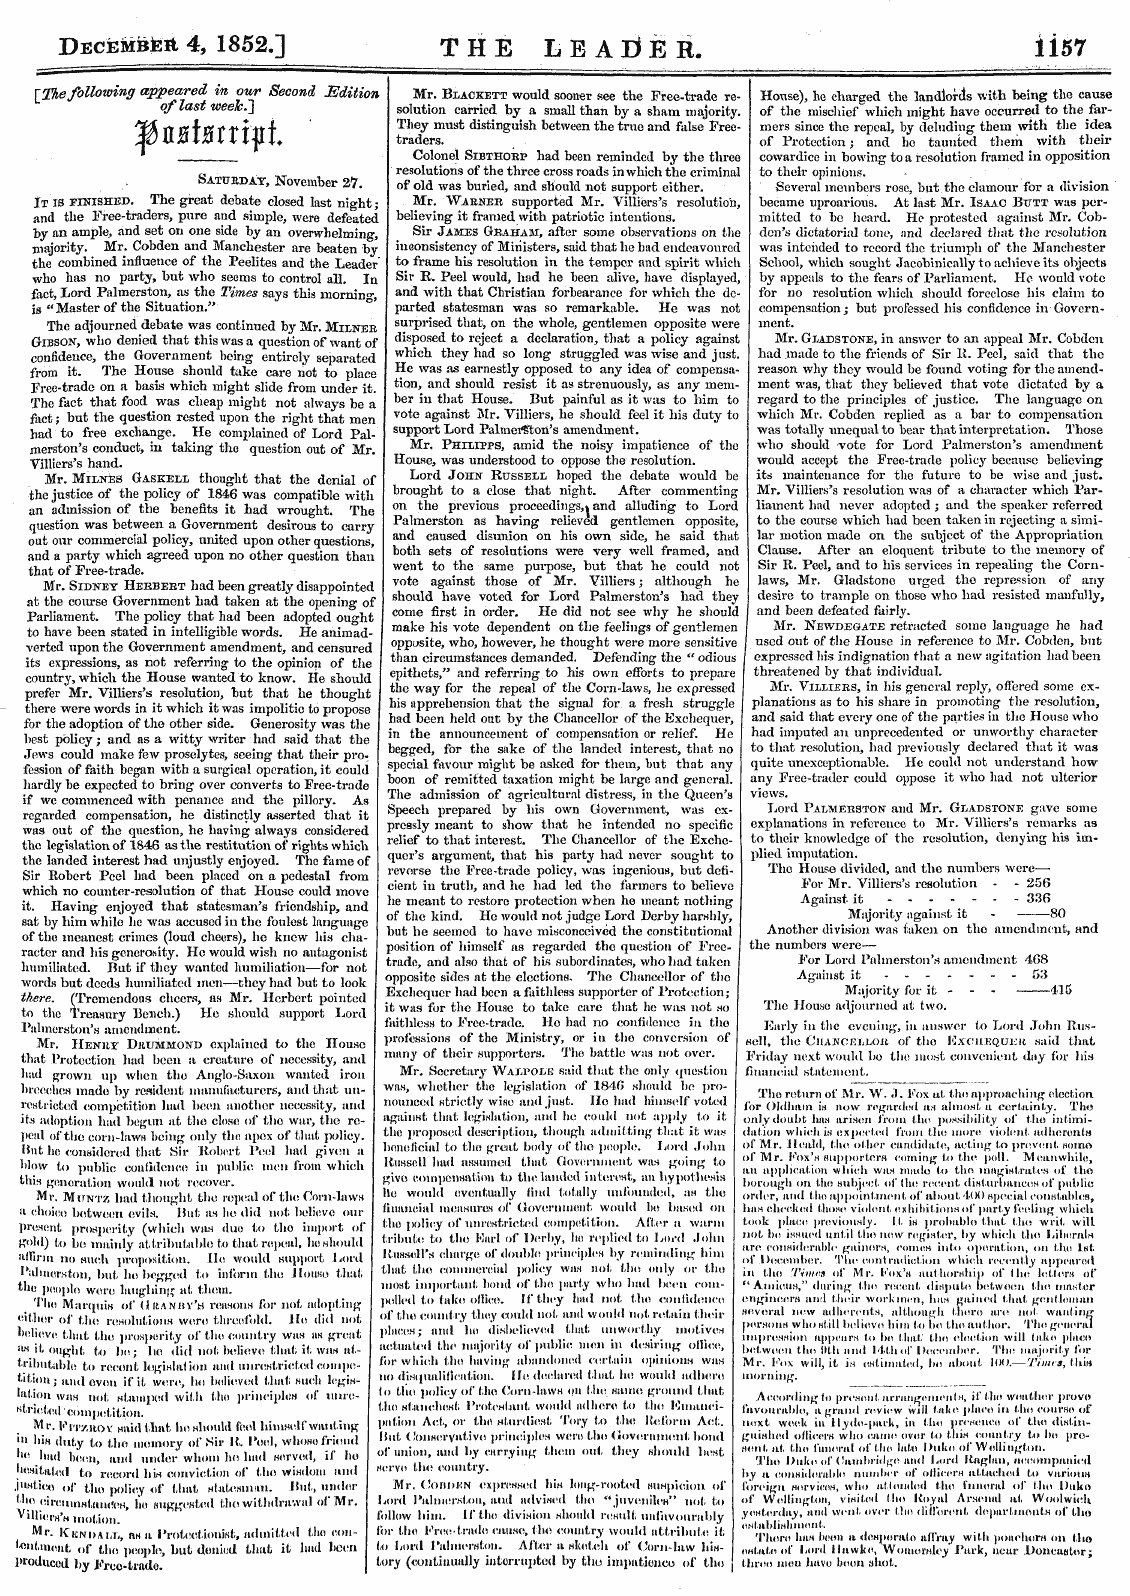 Leader (1850-1860): jS F Y, Country edition - Ifaatarrqii.